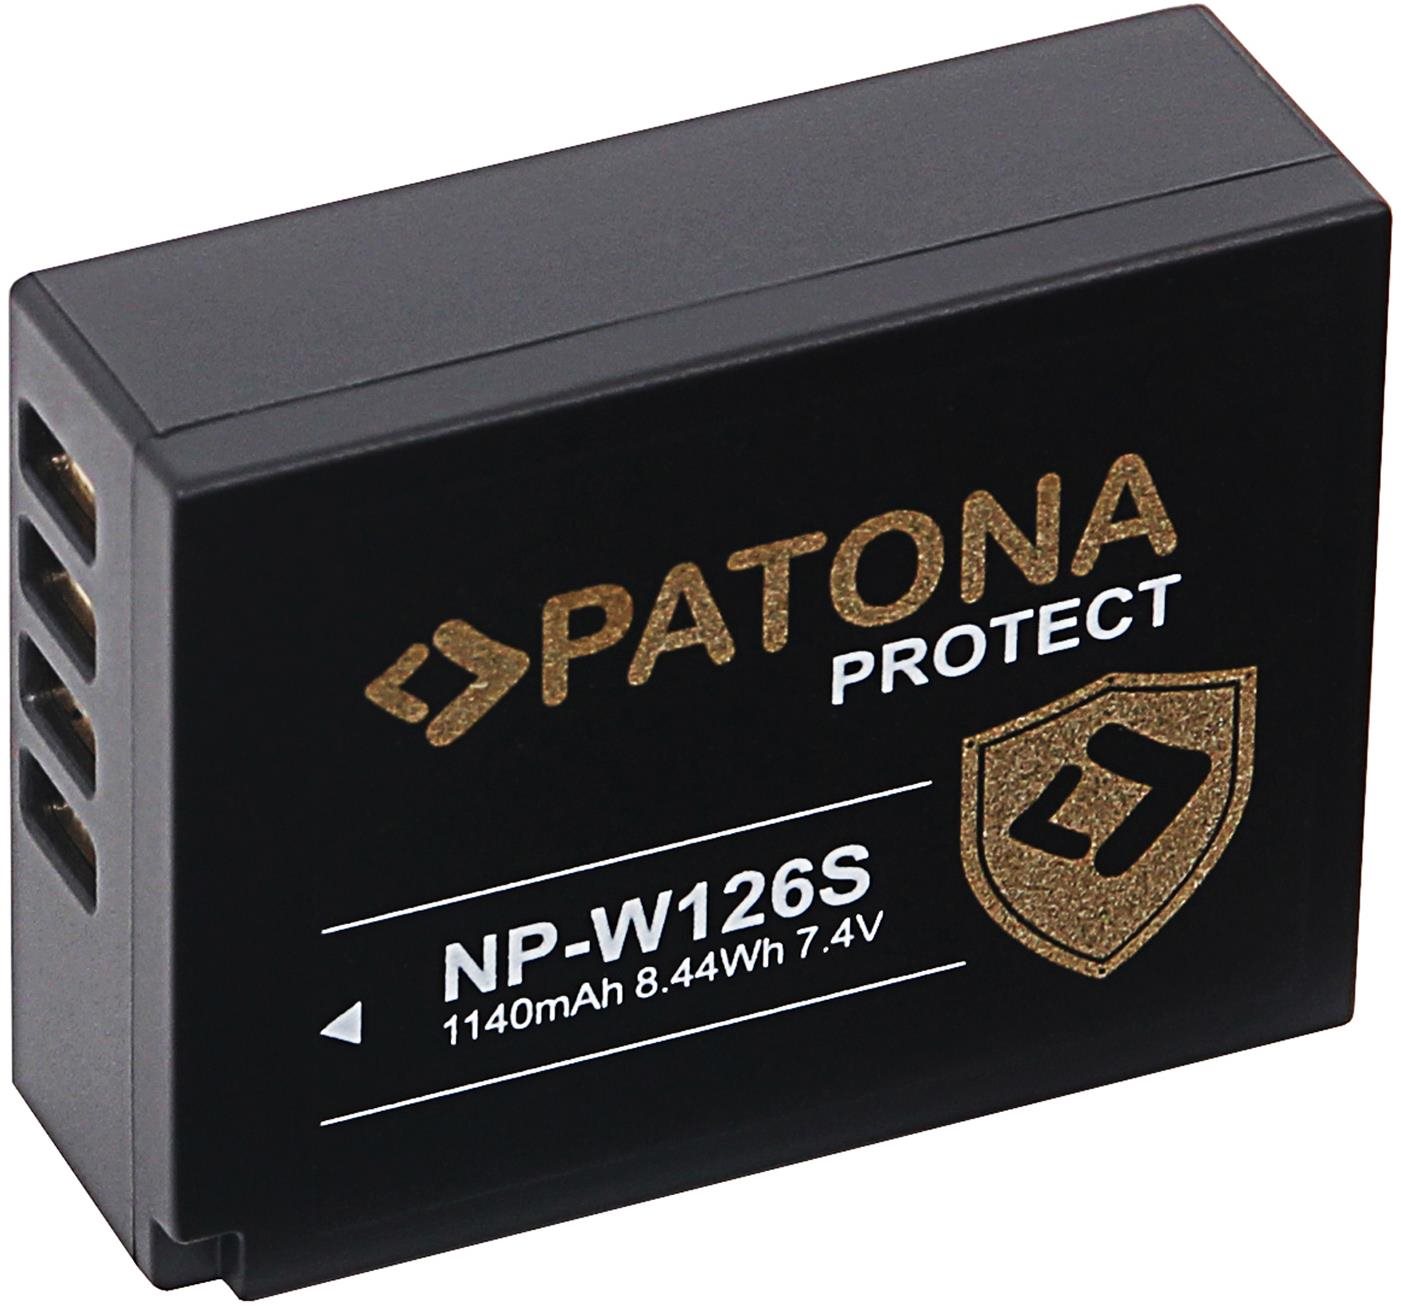 PATONA Fuji NP-W126S 1140mAh Li-Ion Protect